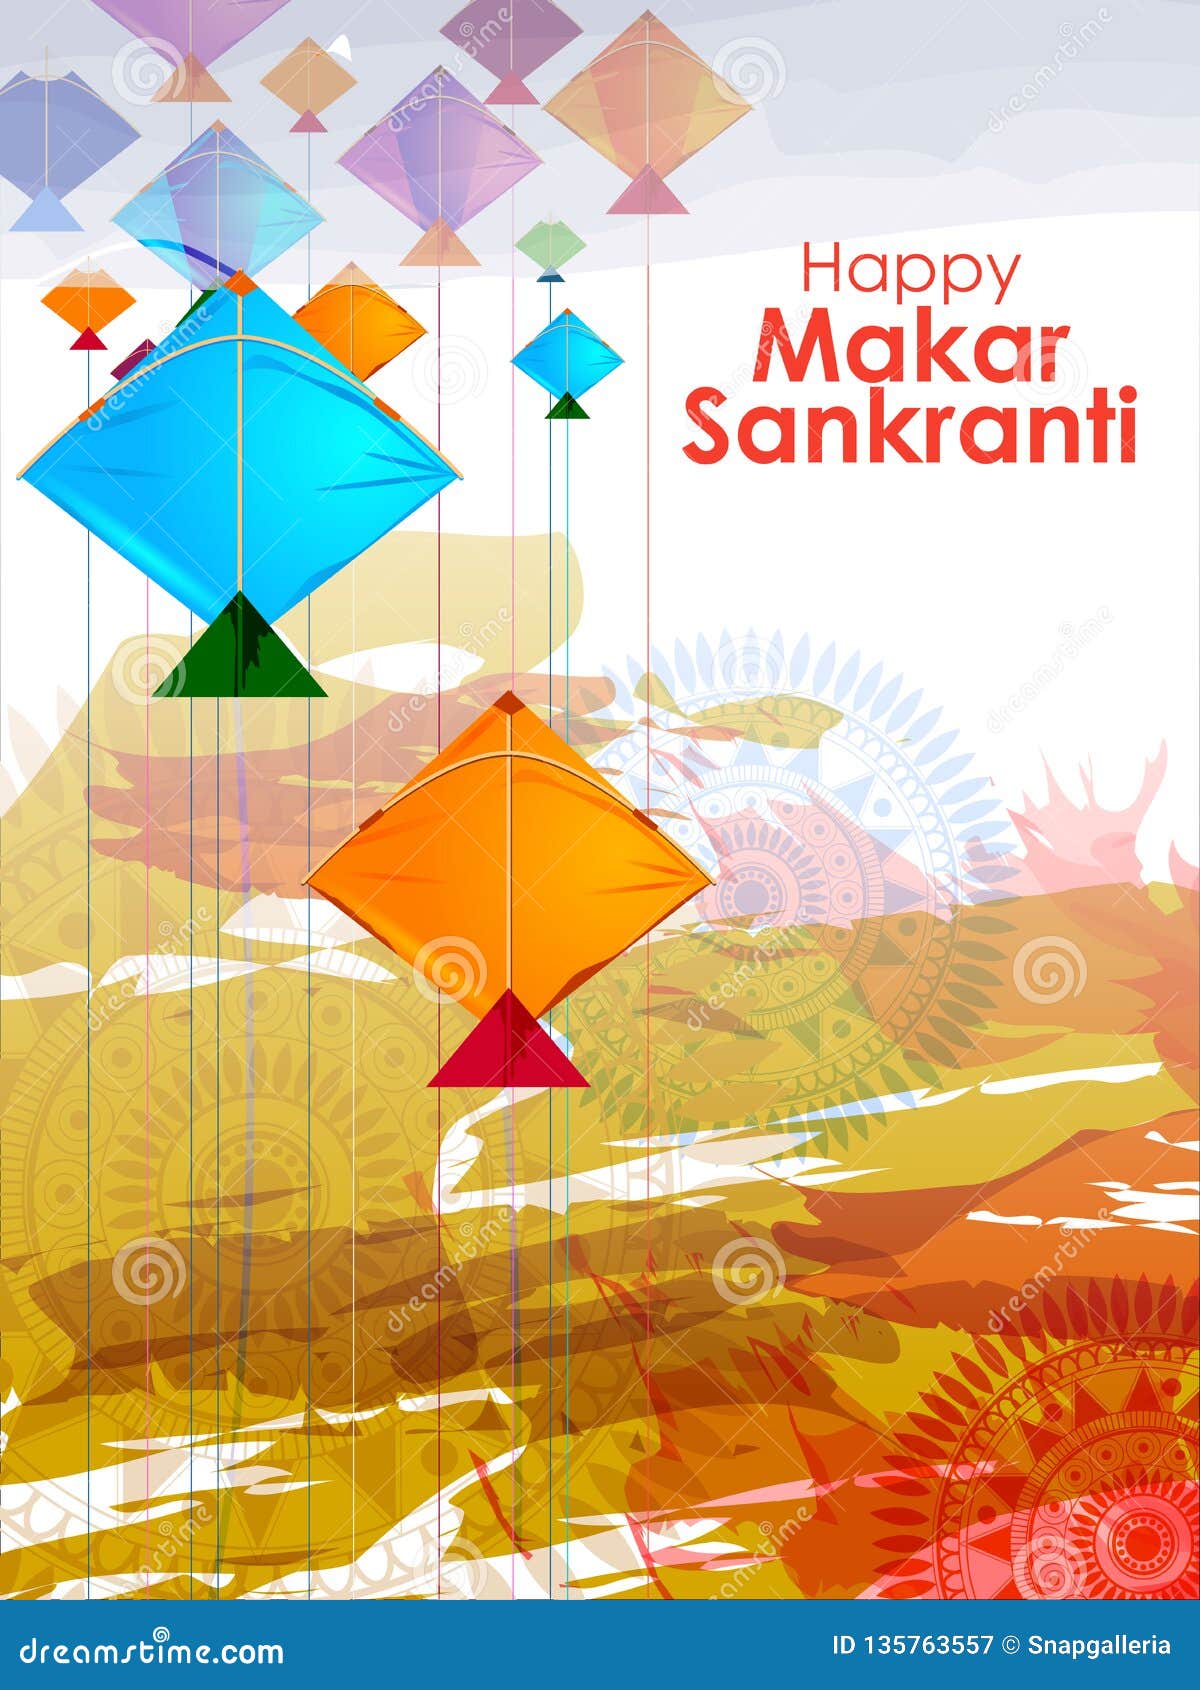 Sankranti editing background  Makar sankranti backgrounds